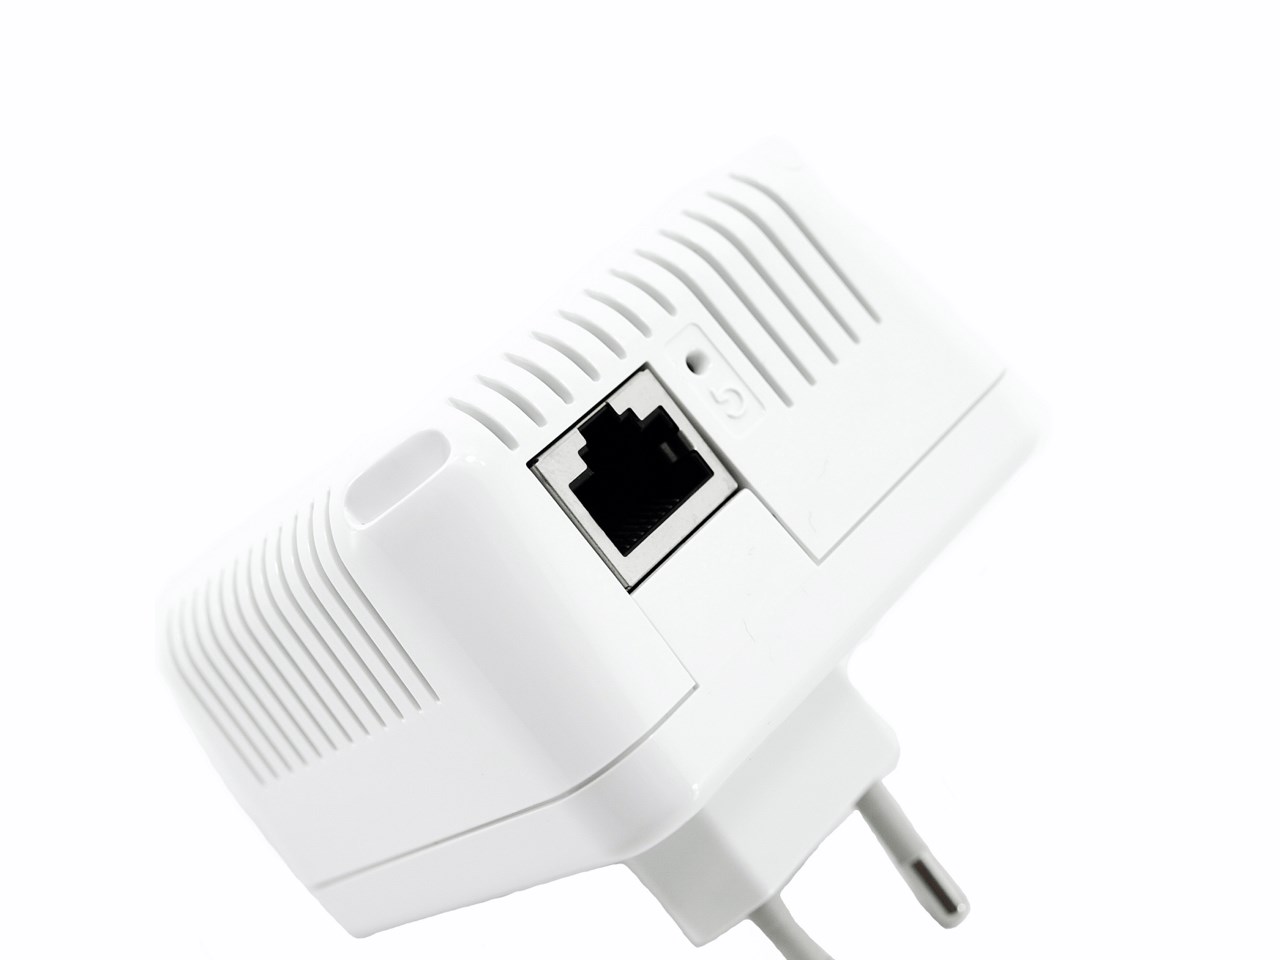 devolo dLAN 500 Powerline Adapter Add-on Extender - White for sale